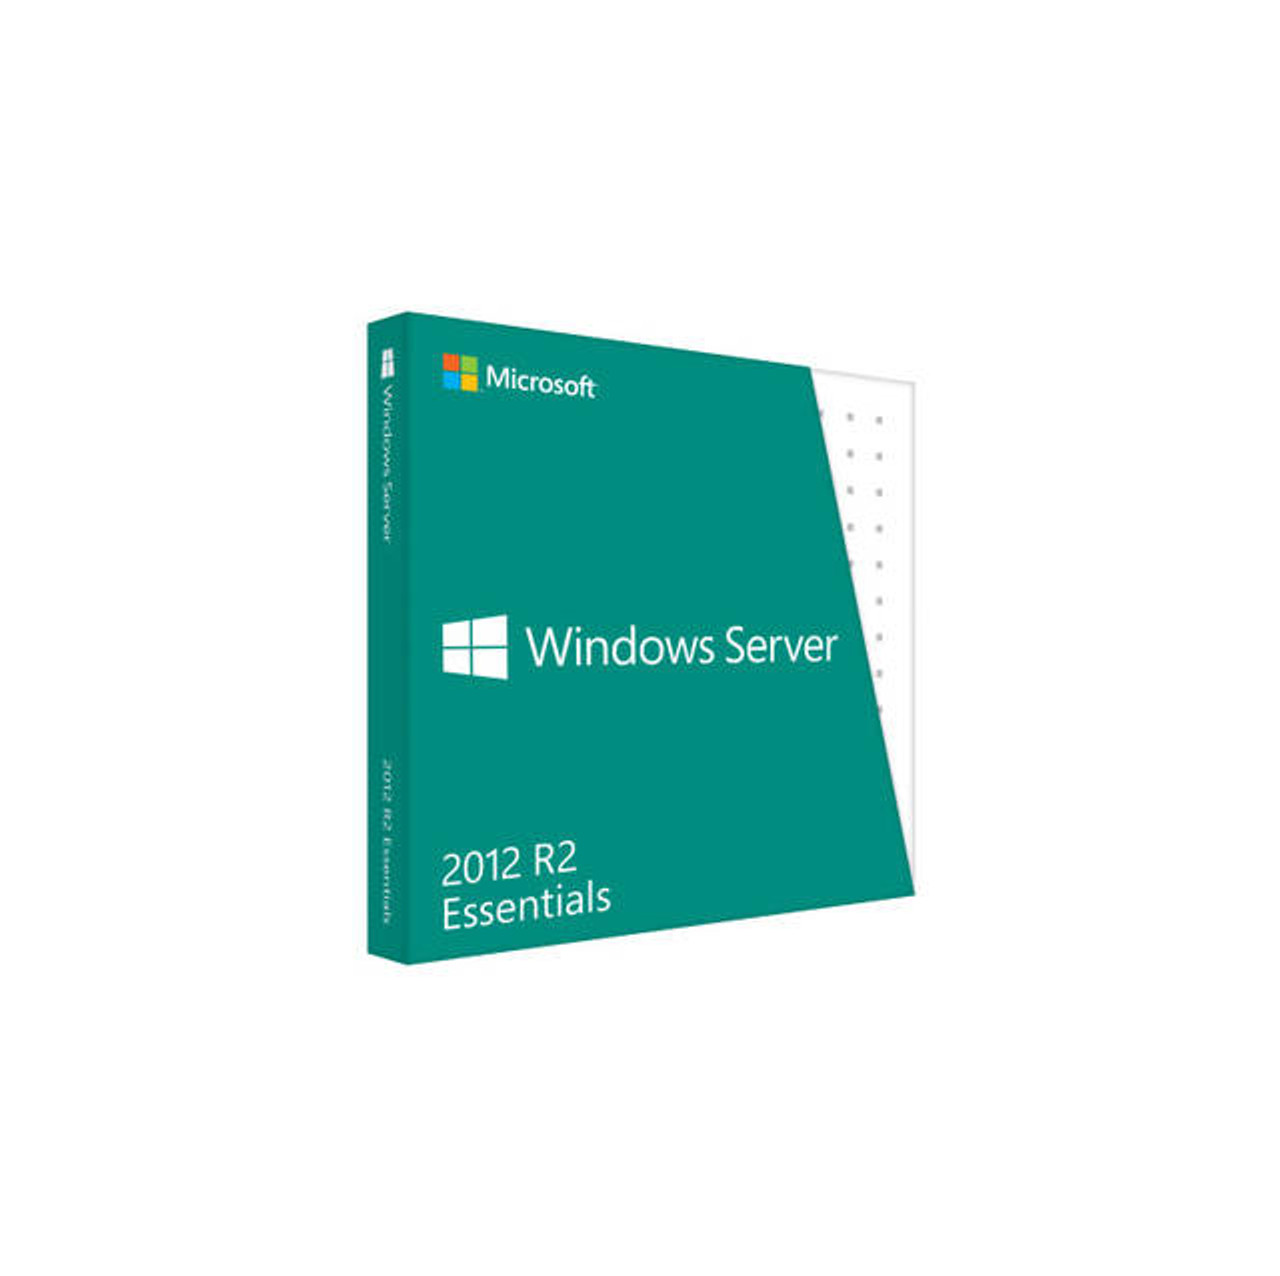 Microsoft Windows Server 2012 R2 Essentials Operating System 64-bit English (1 Pack), OEM